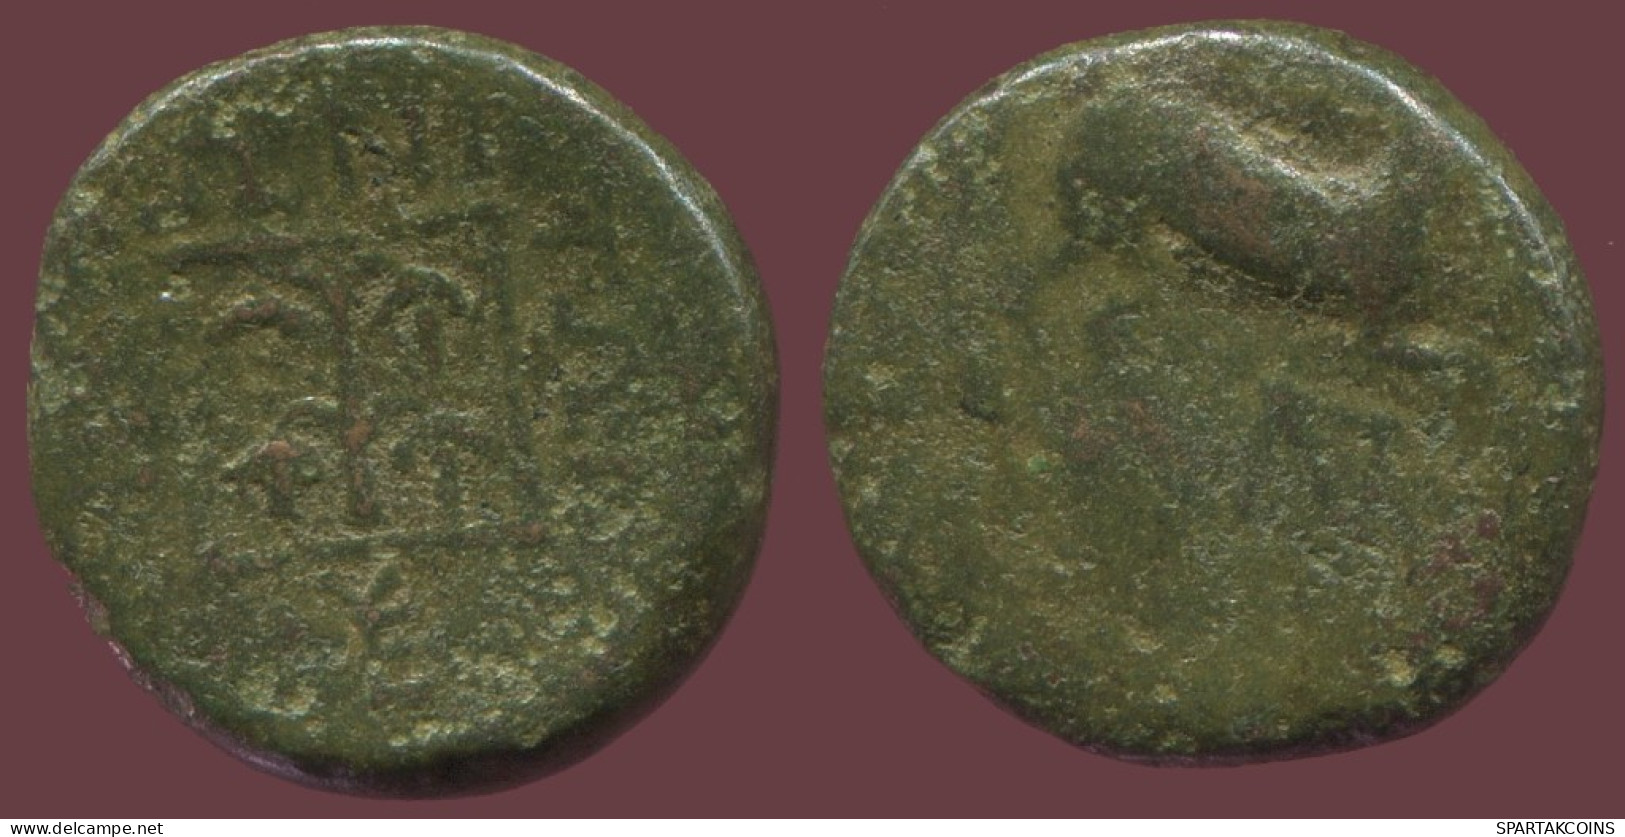 DEER Ancient Authentic Original GREEK Coin 2.9g/14mm #ANT1456.9.U.A - Greek